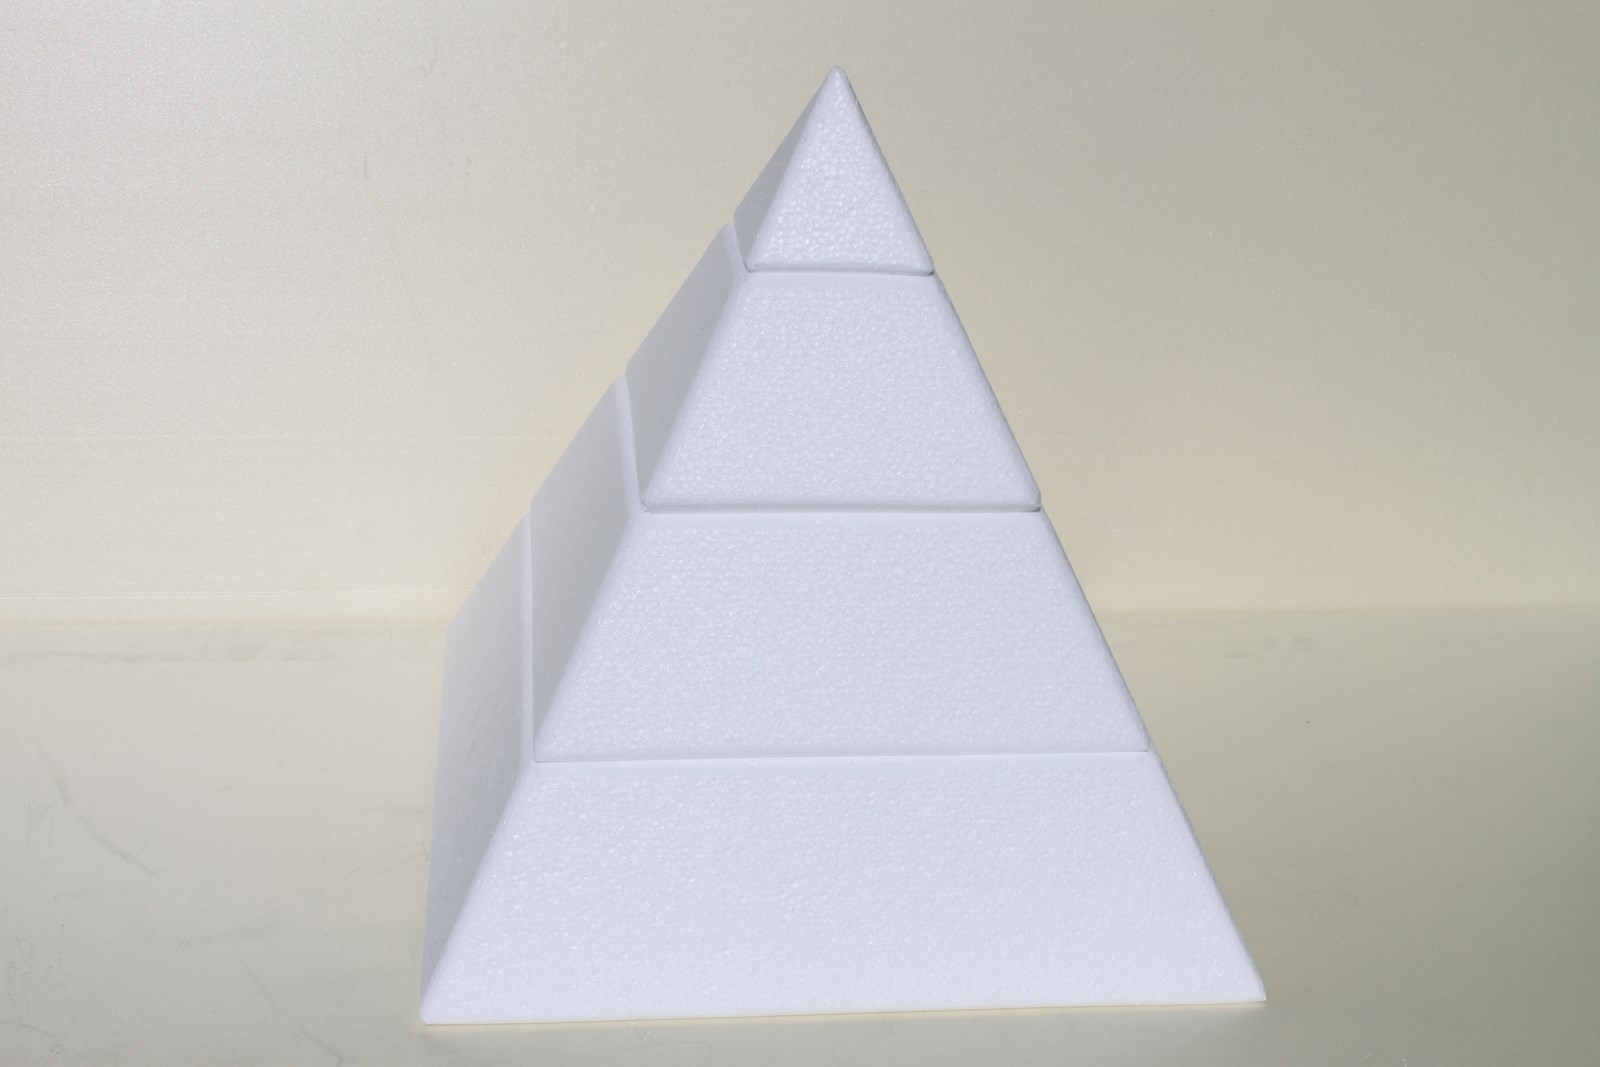 Pyramid cake dummies with straight edges of 10 cm high